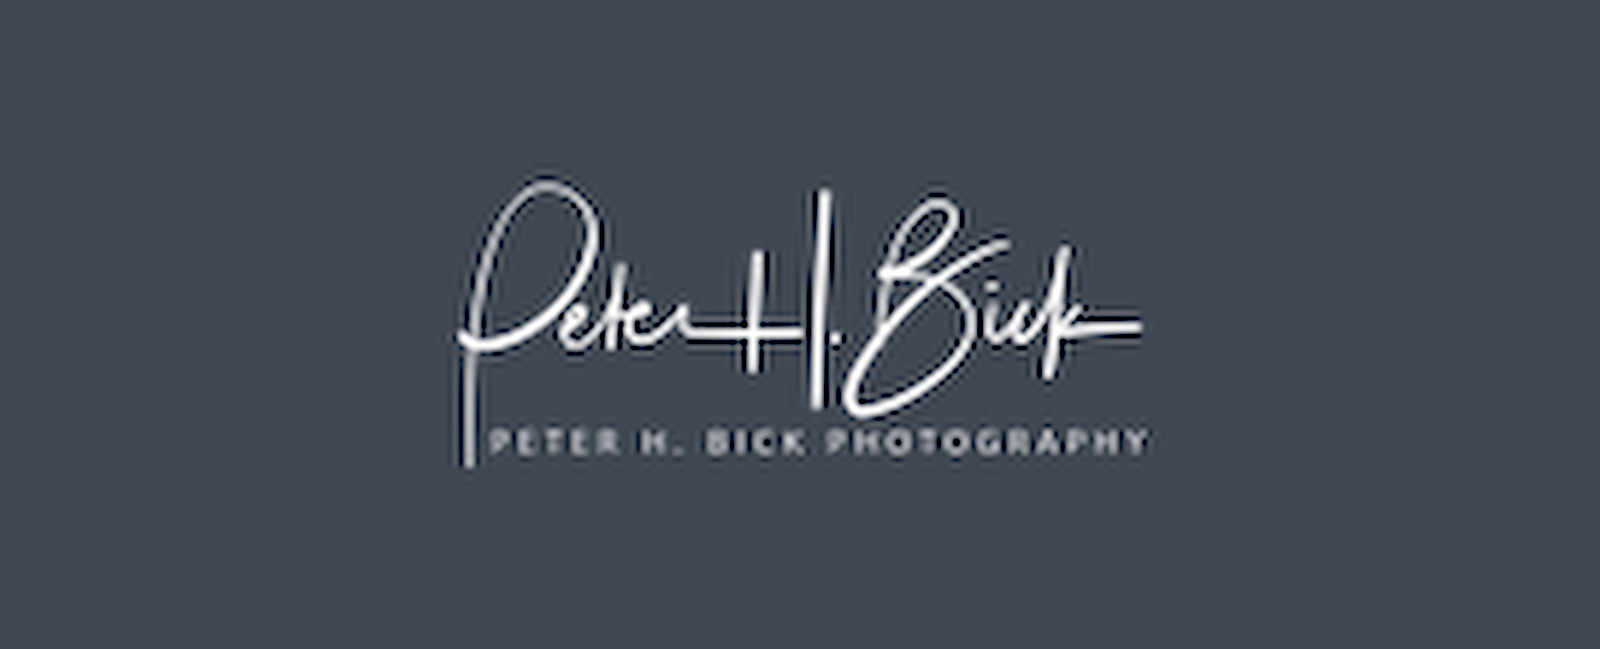 Peter Bick Photography